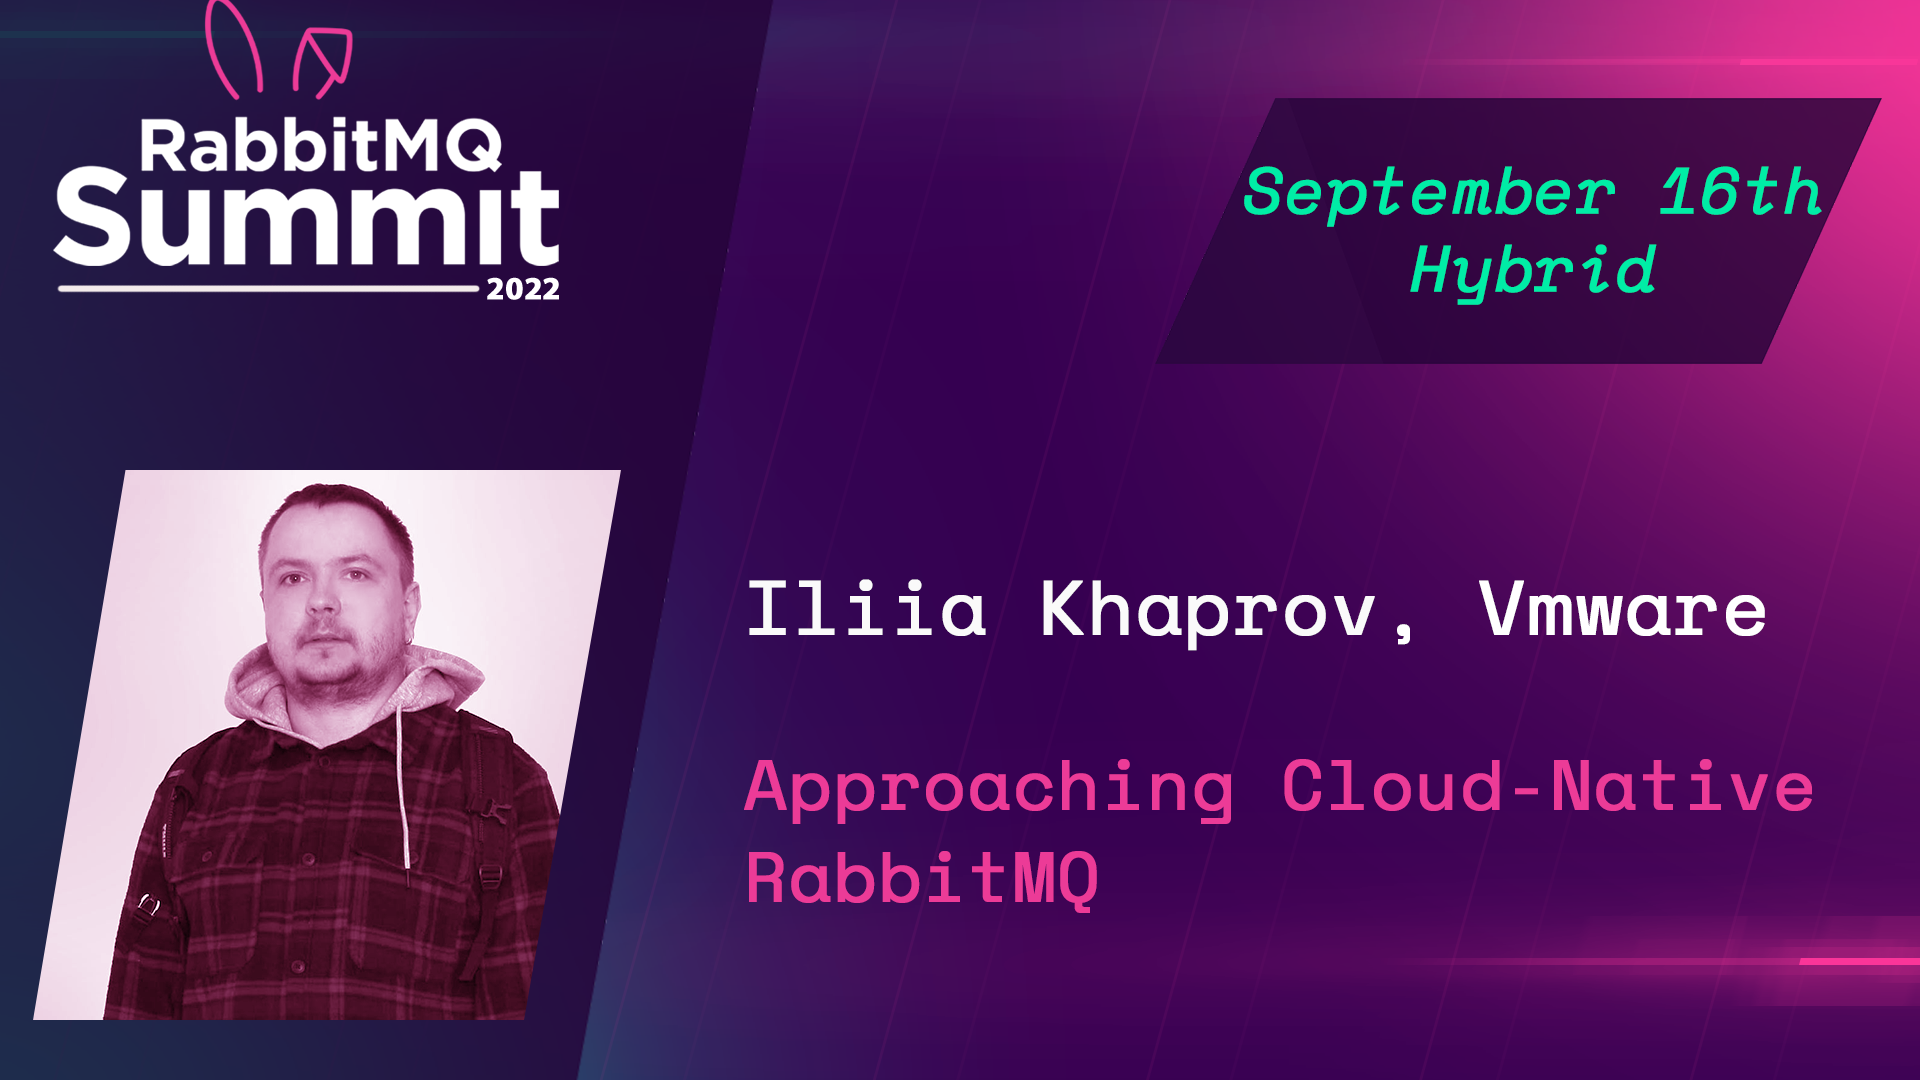 Approaching Cloud-native RabbitMQ - Iliia Khaprov